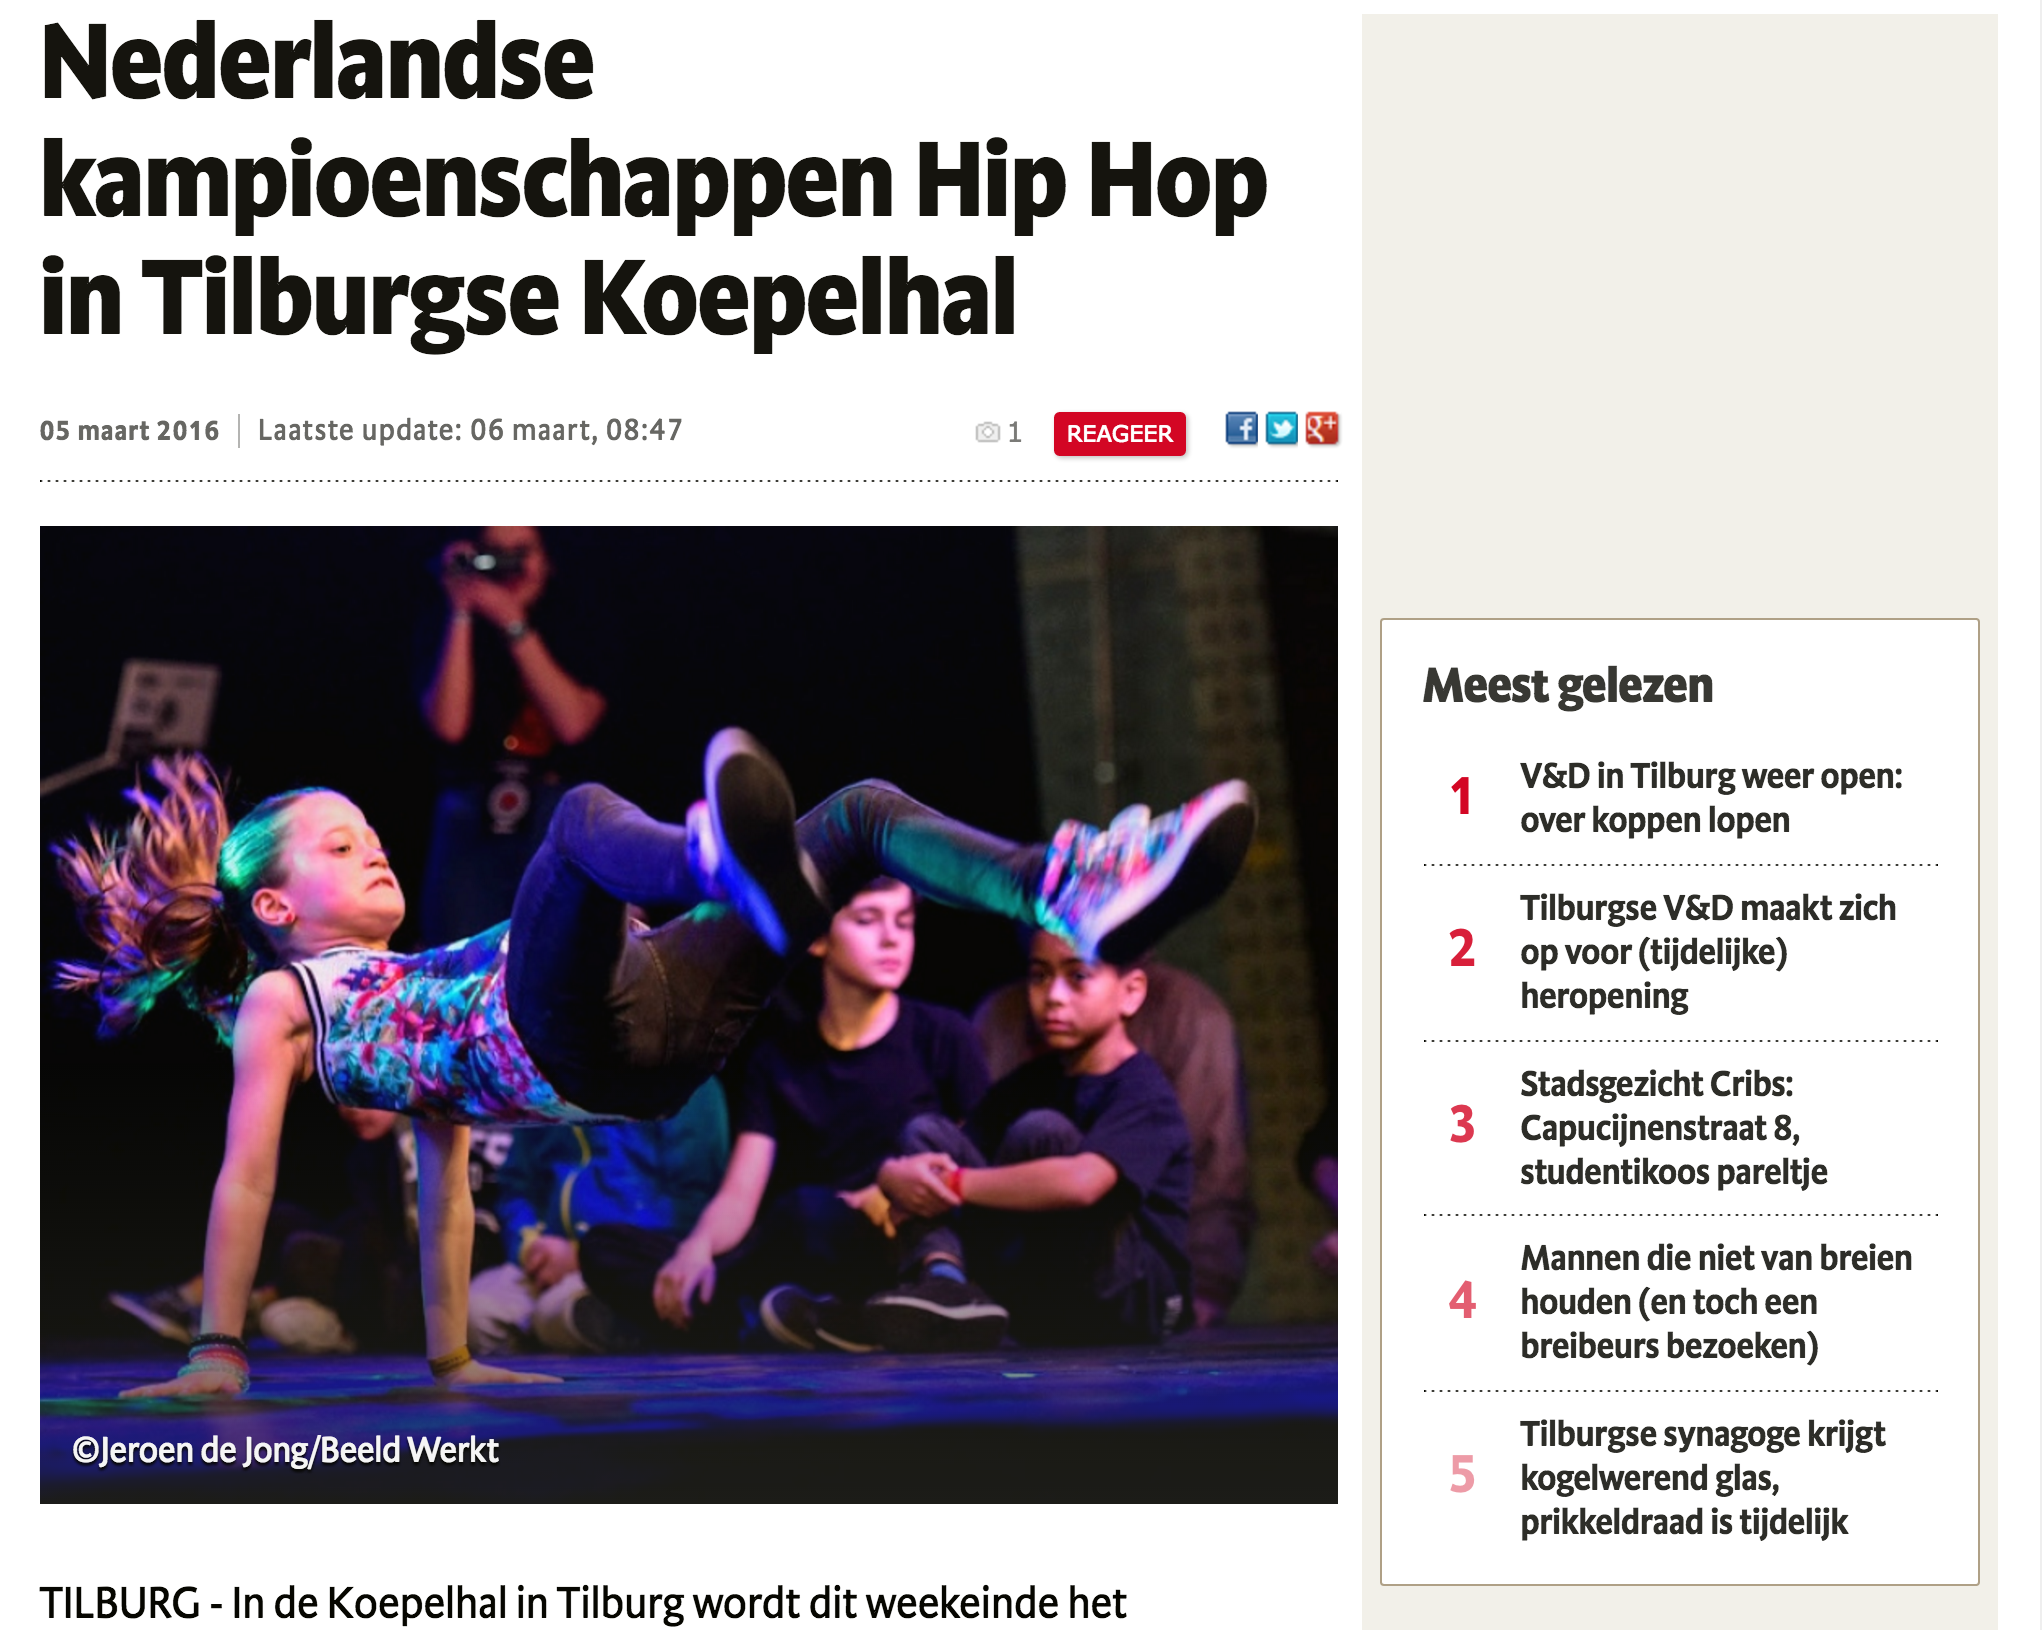 Dutch Hip Hop Championships in Tilburg Koepelhal